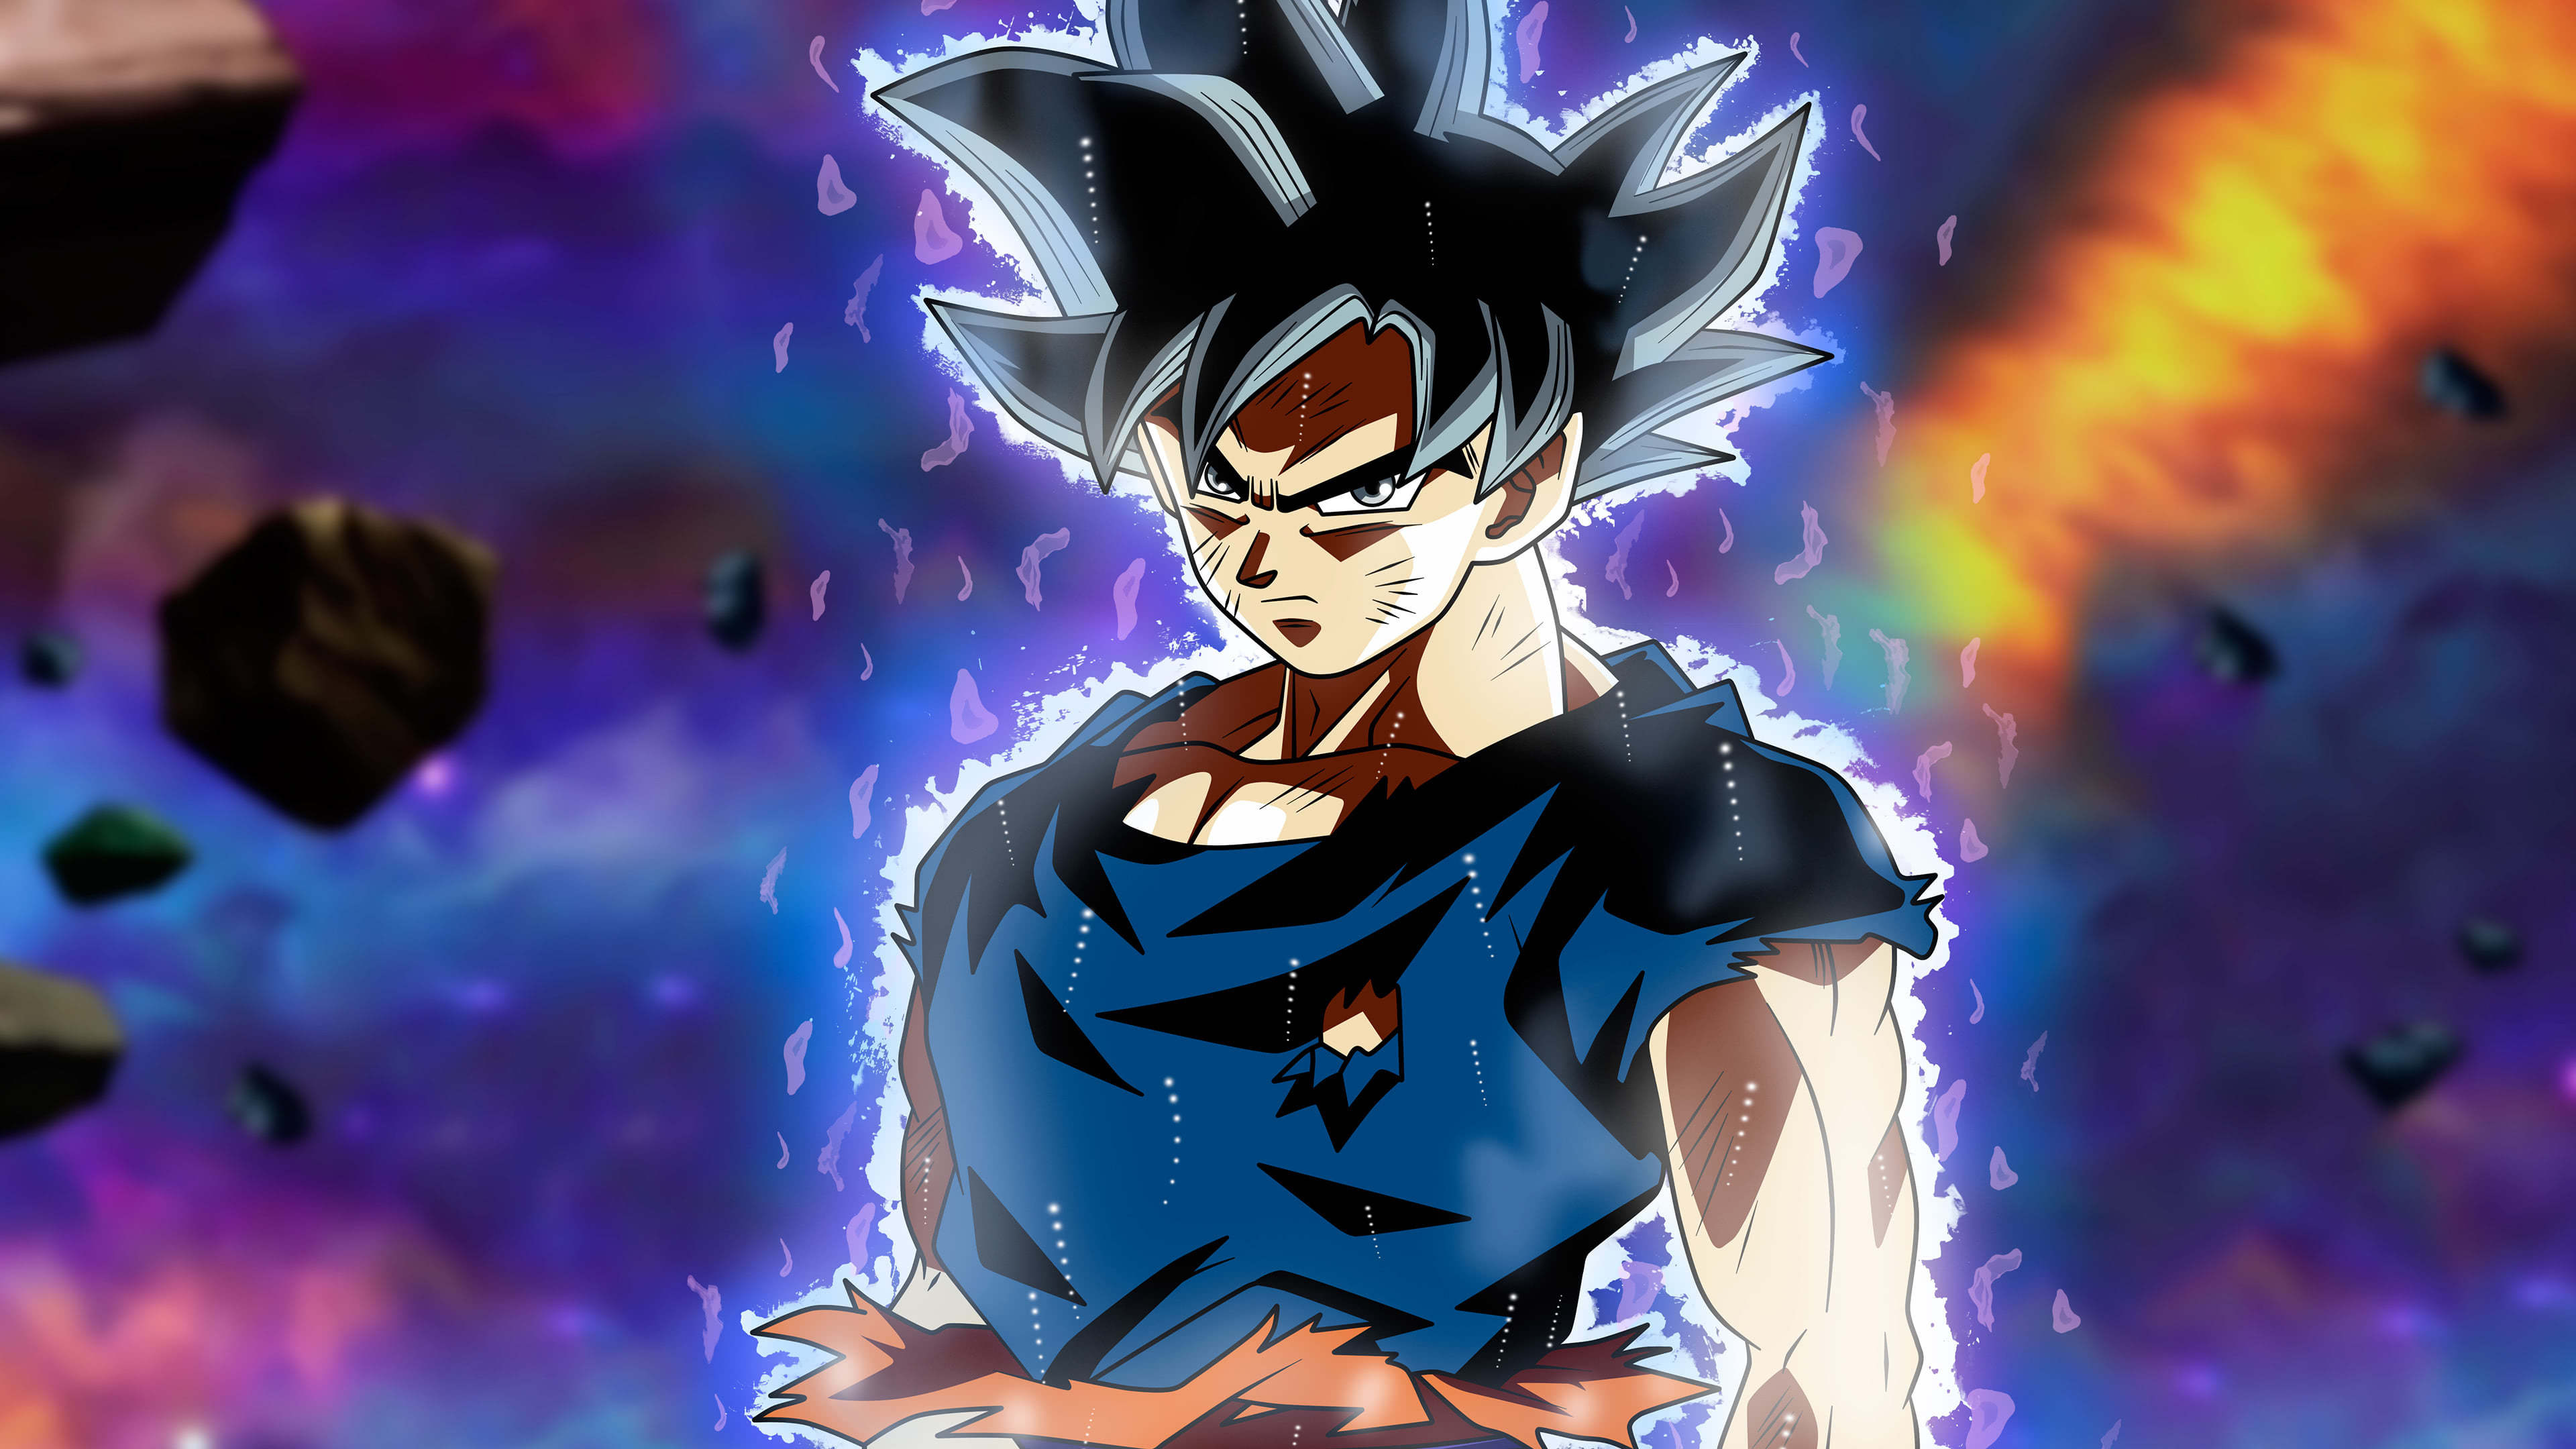 Dragon Ball Super Ultra Instinct Goku Portrait UHD 4K Wallpaper